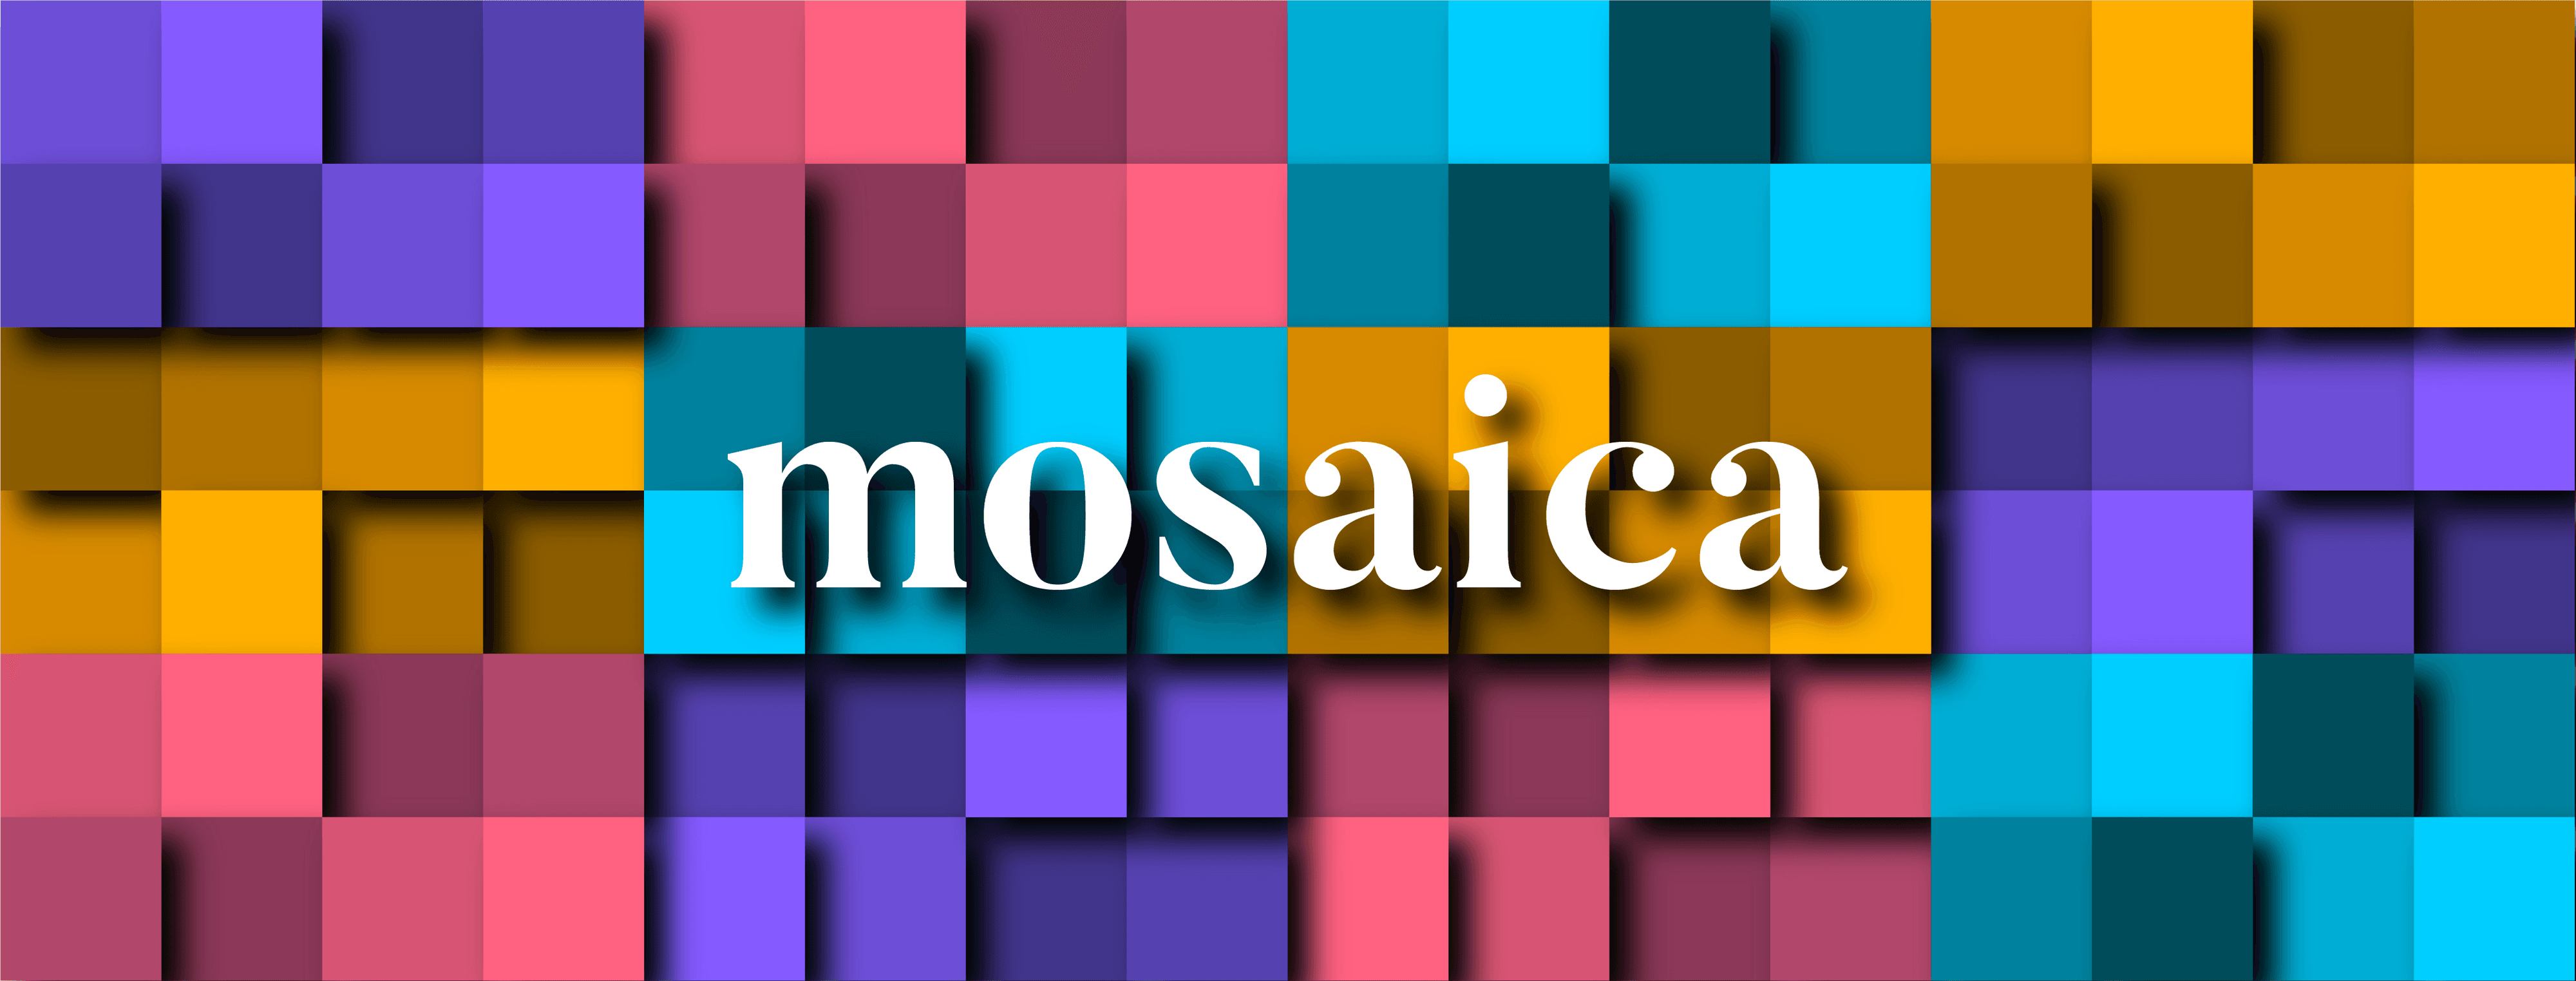 mosaica_designers banner